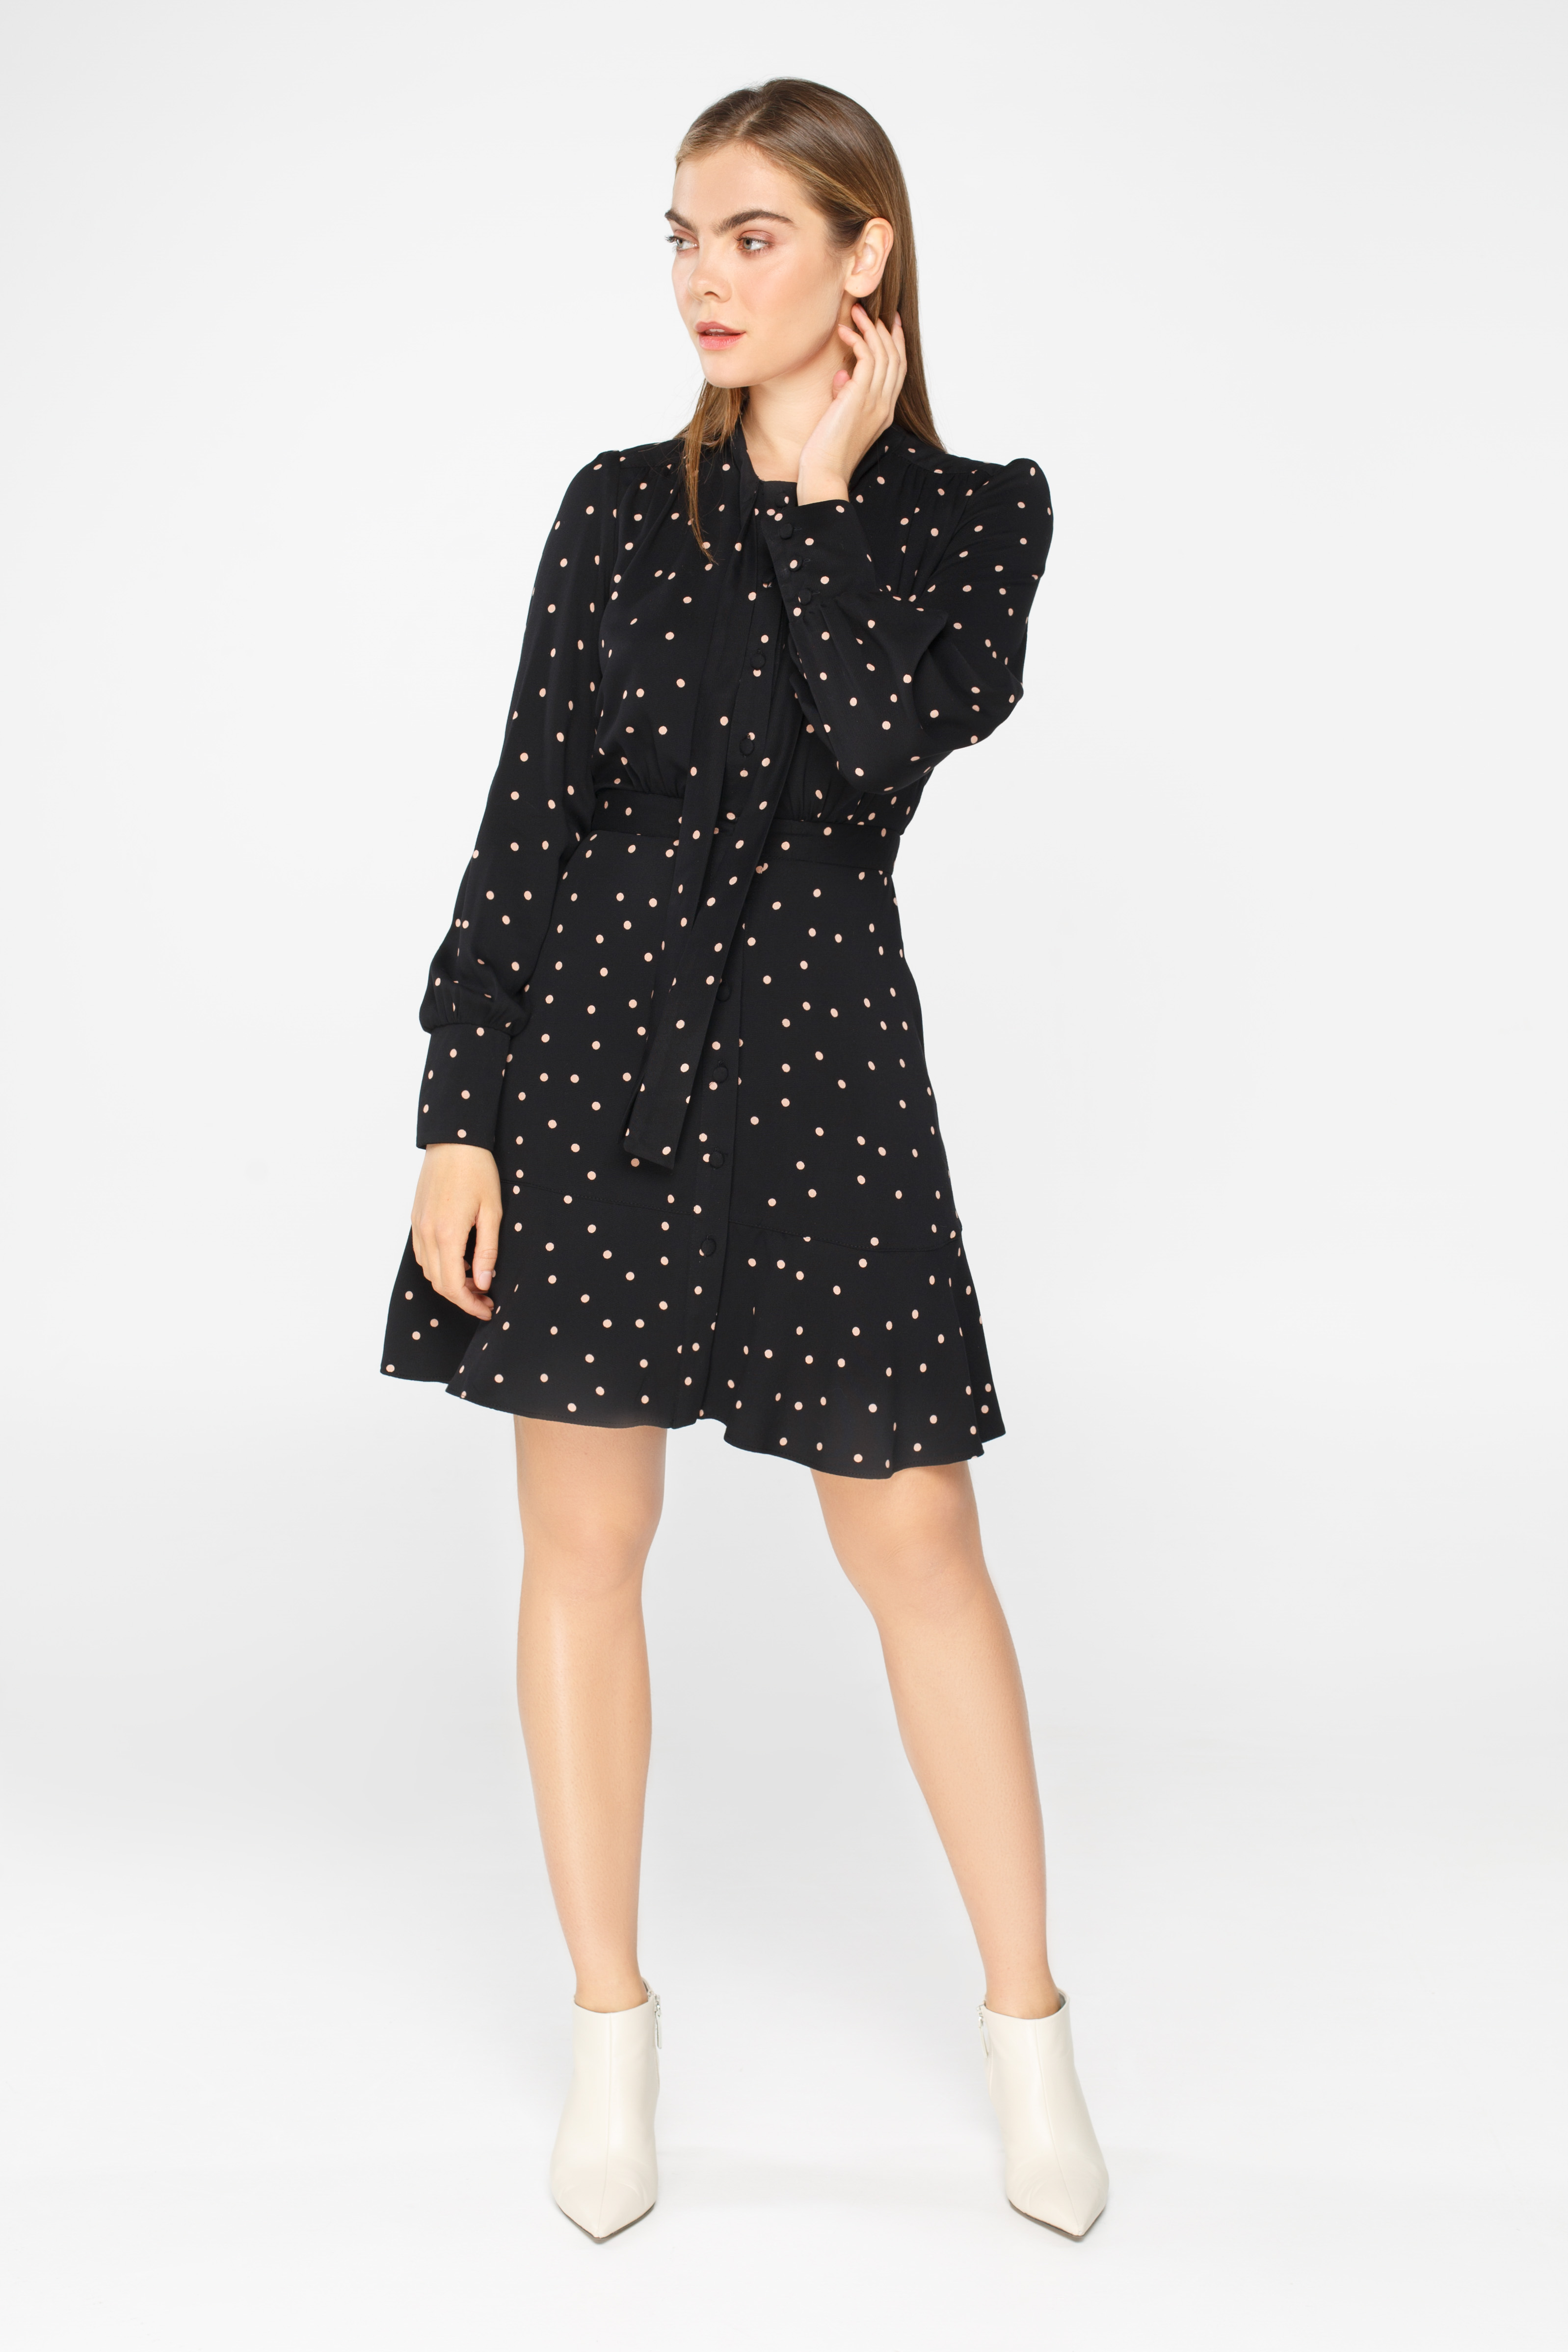 Black polka dot dress above the knee, photo 2